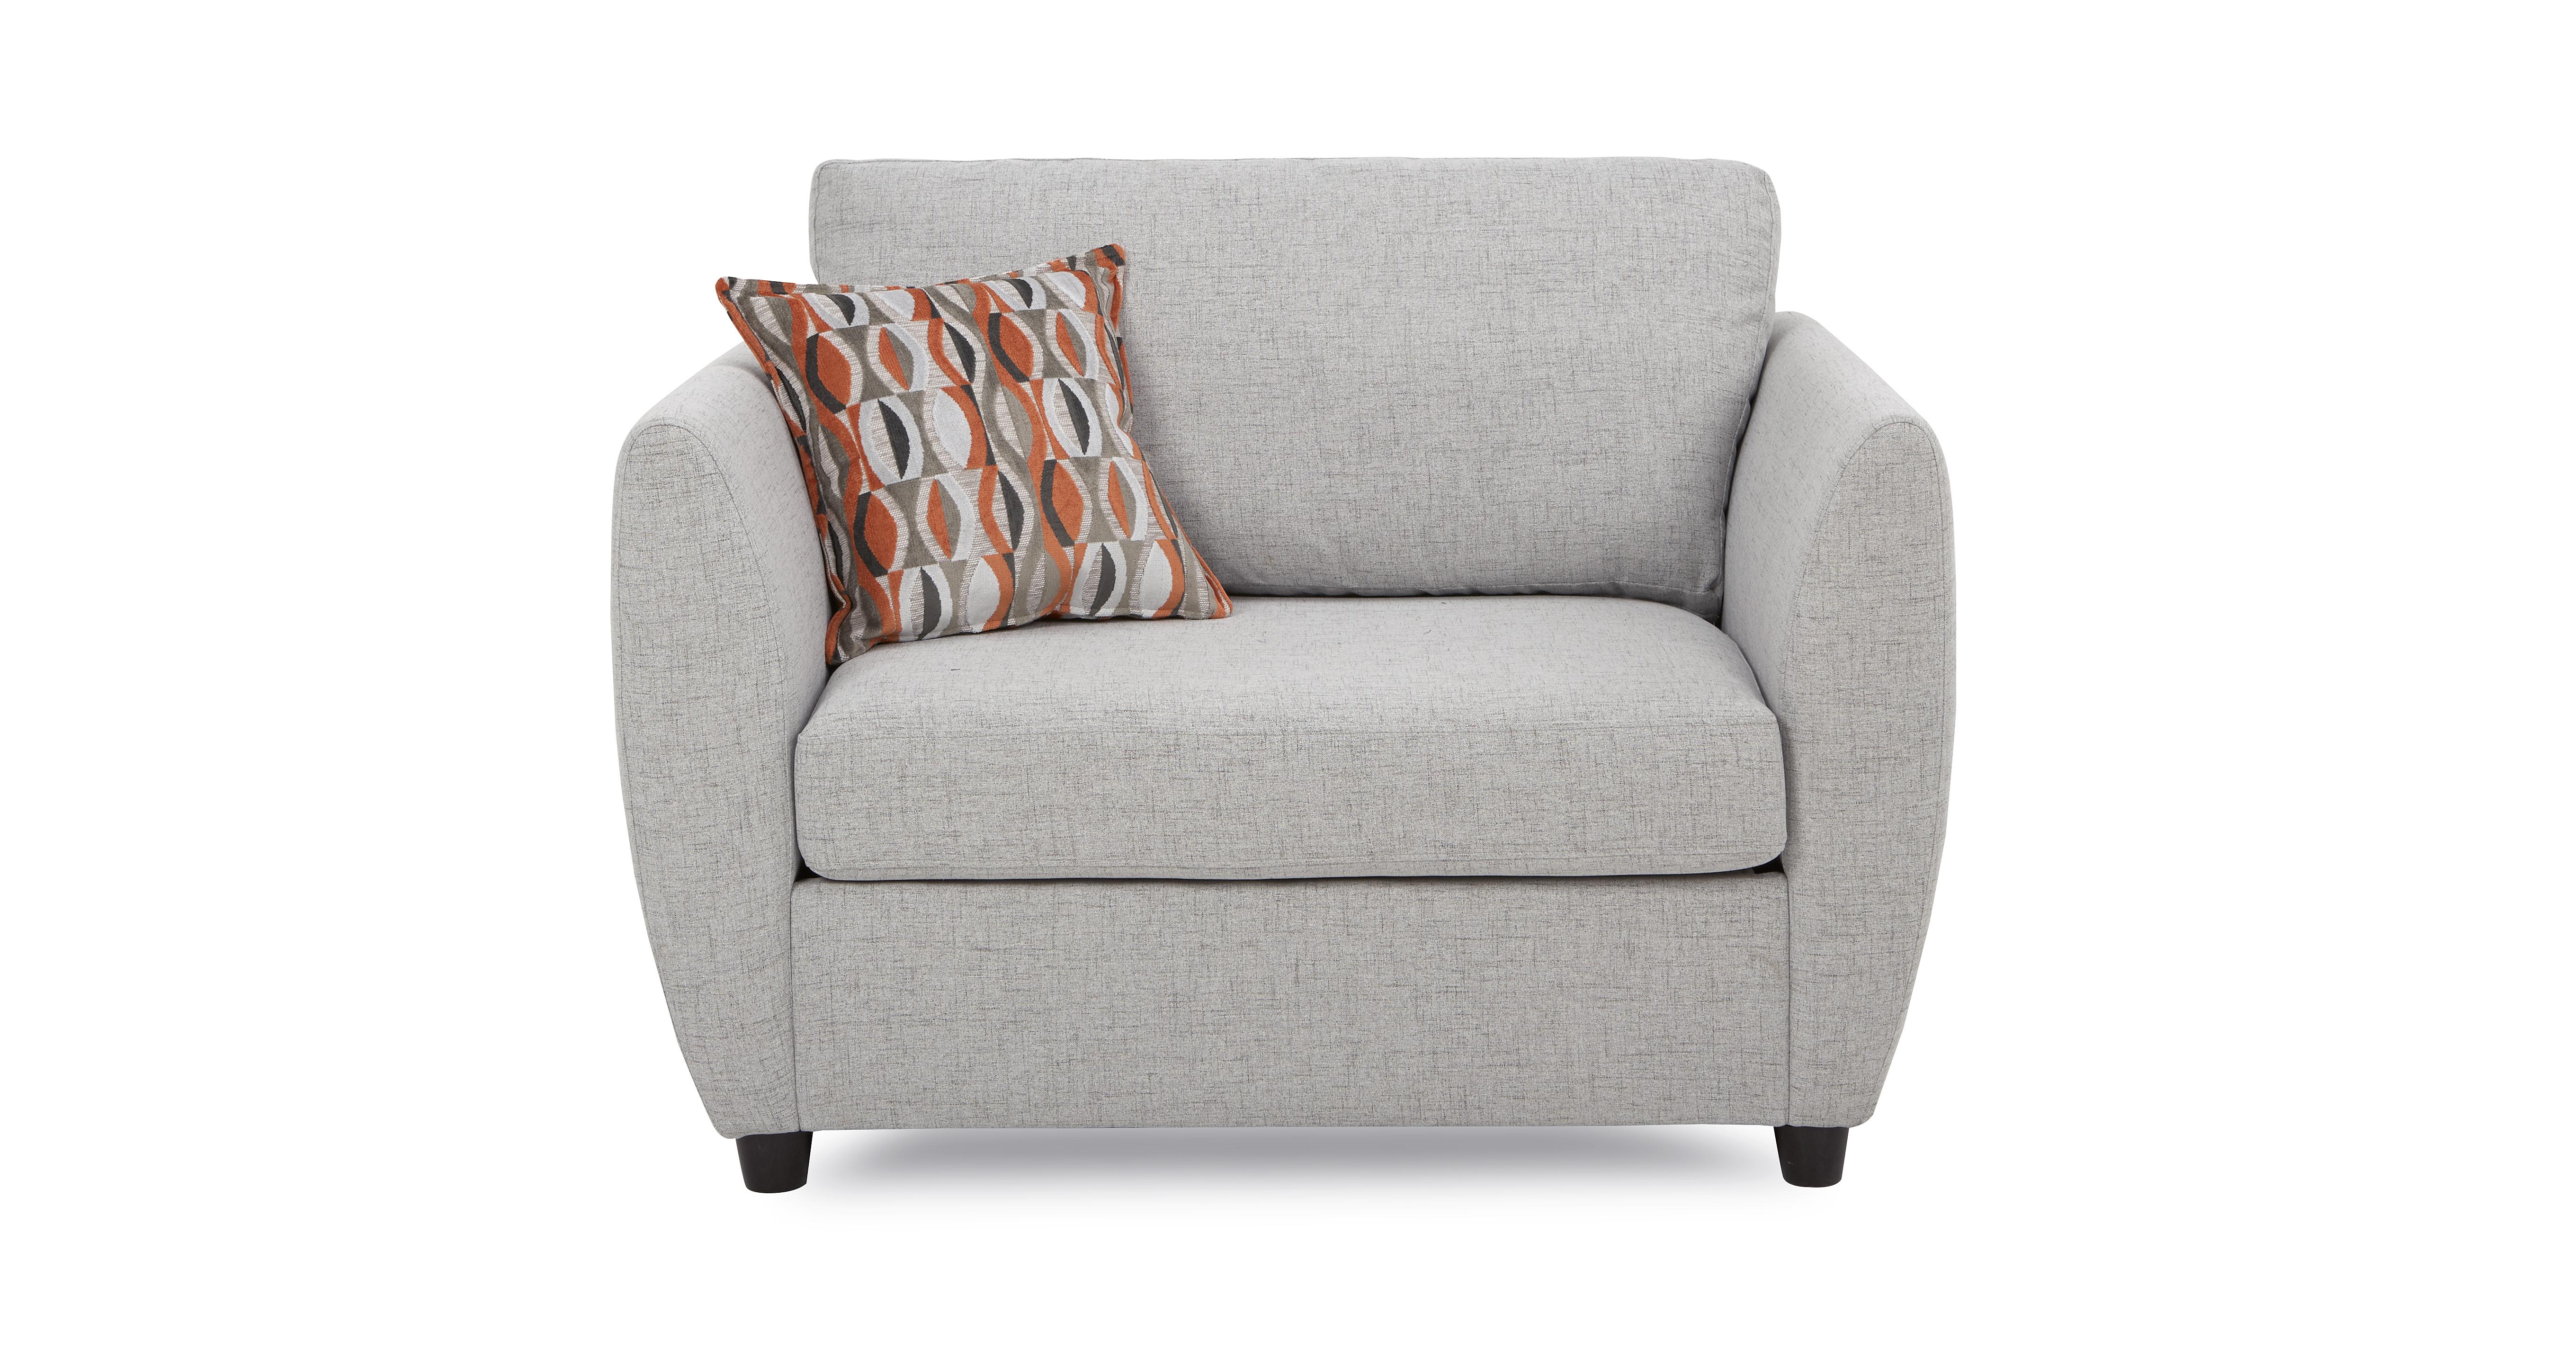 single sofa bed chair sale